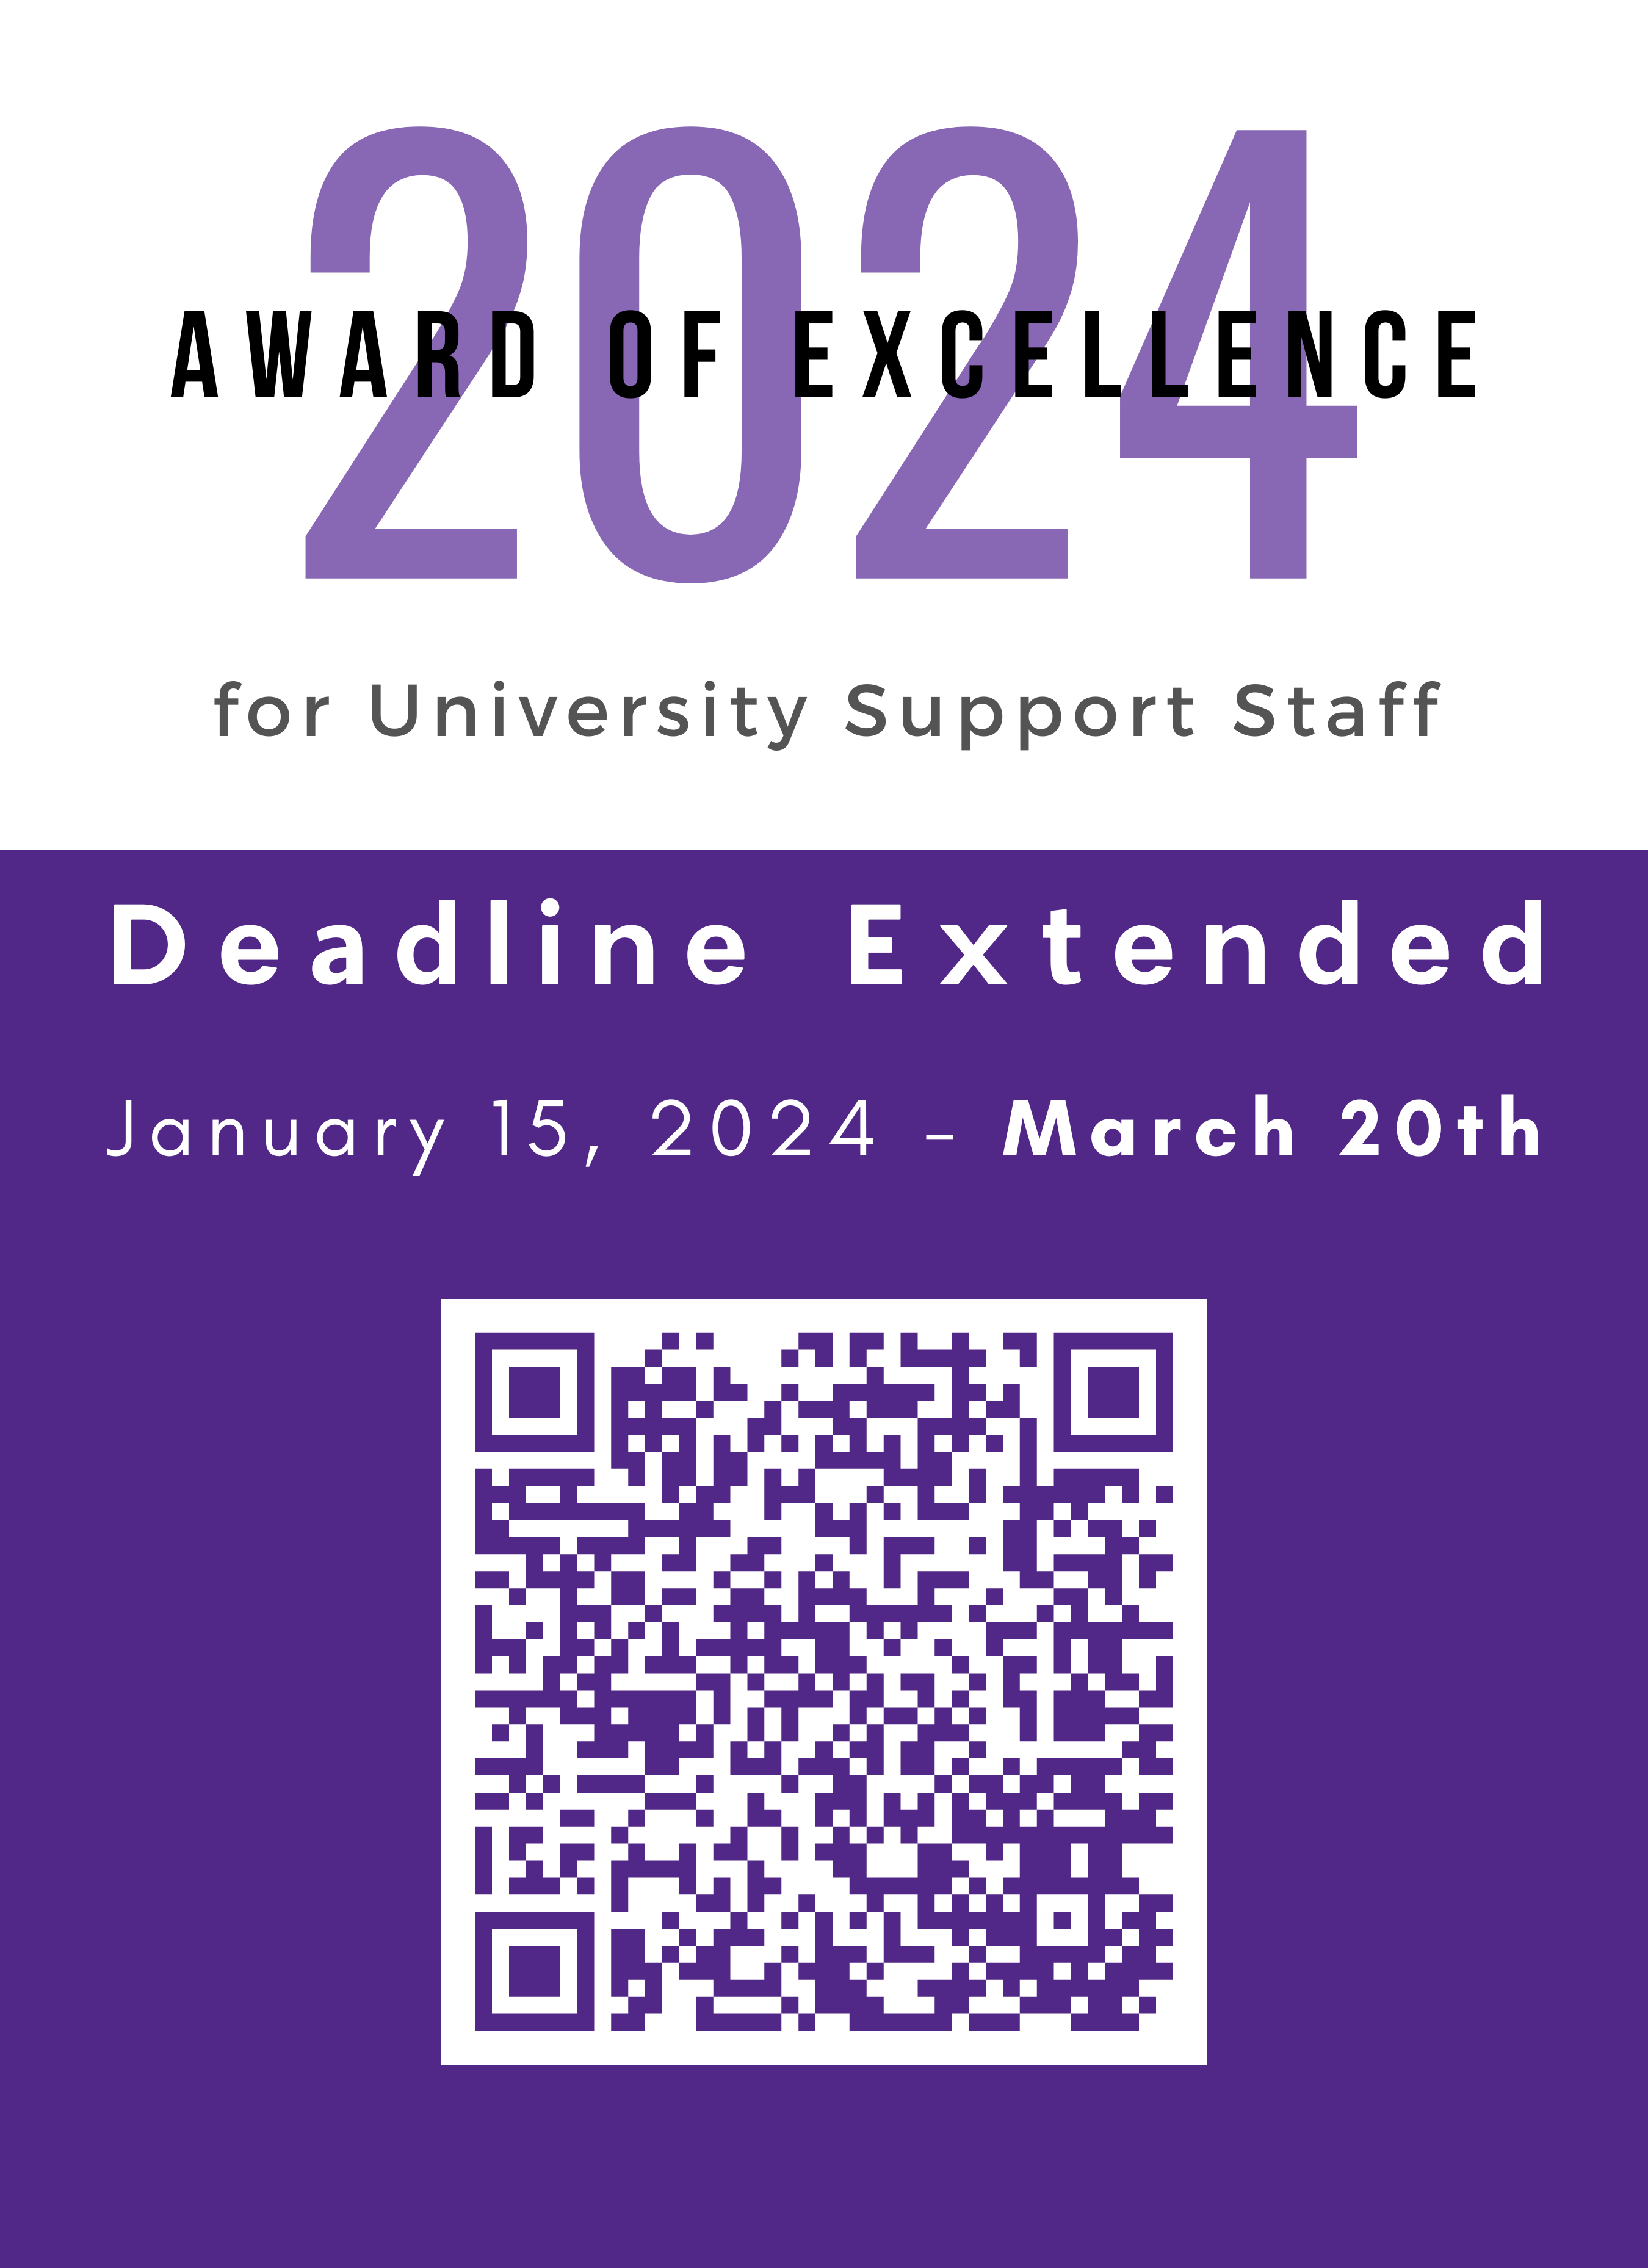 uss excellence award deadline extended